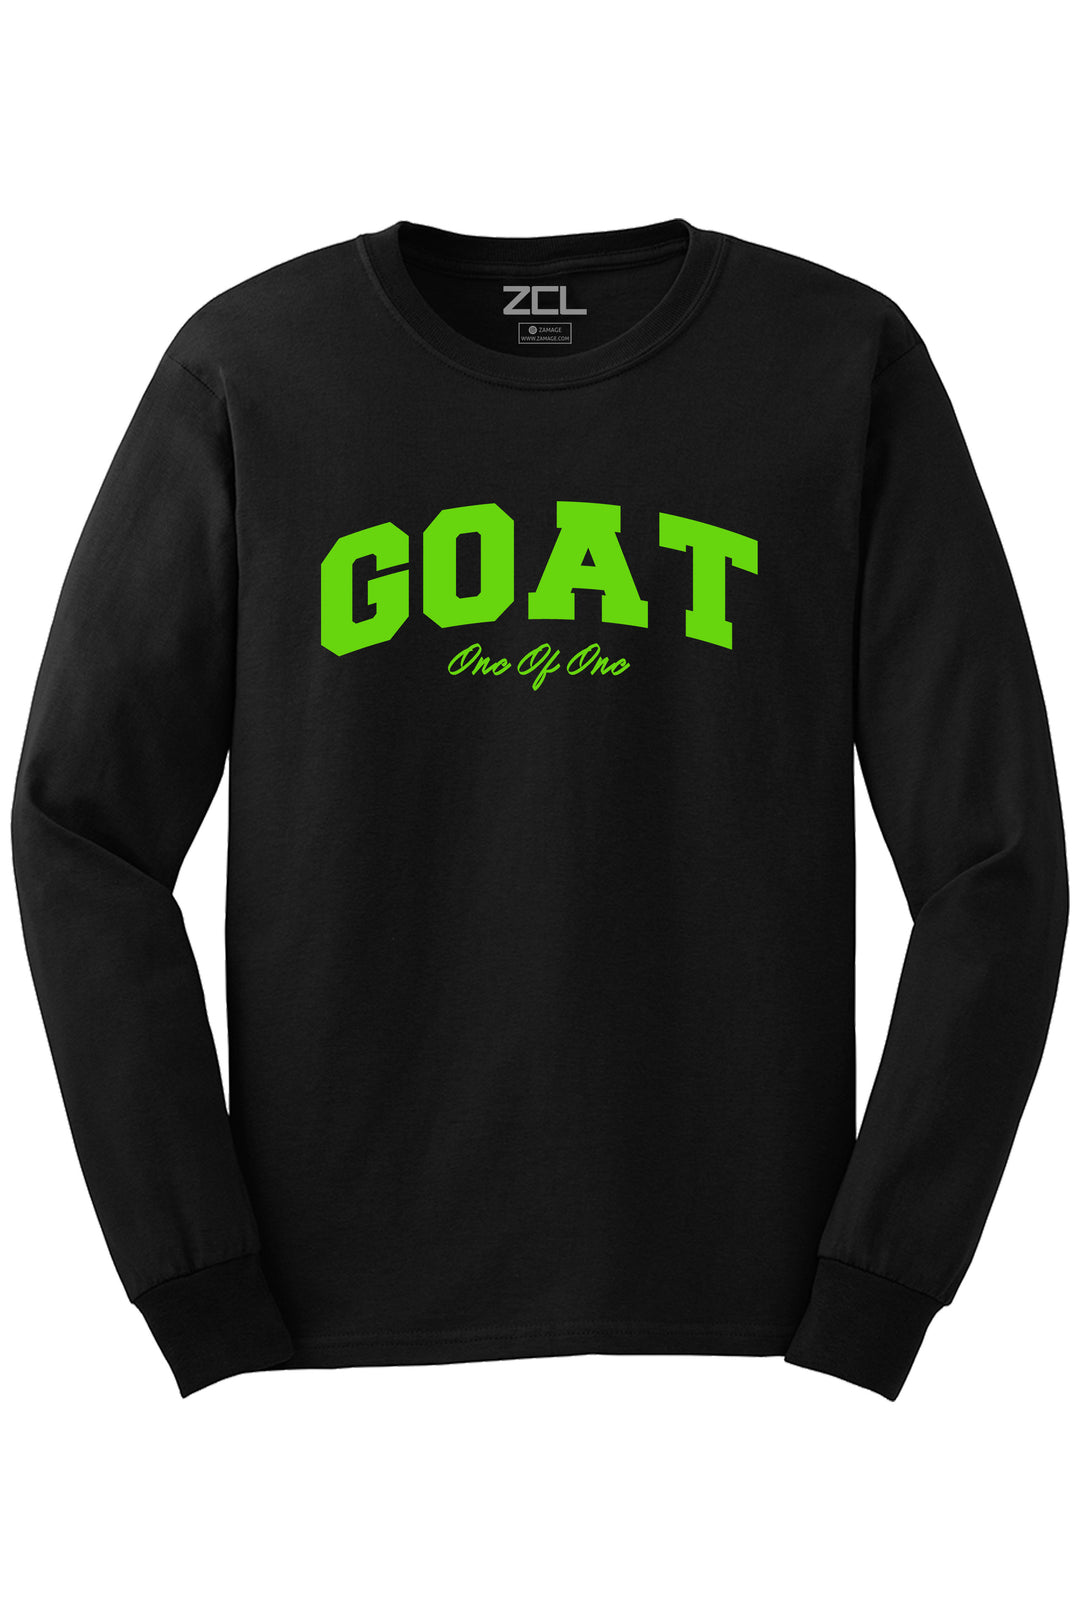 Goat Long Sleeve Tee (Lime Green Logo) - Zamage